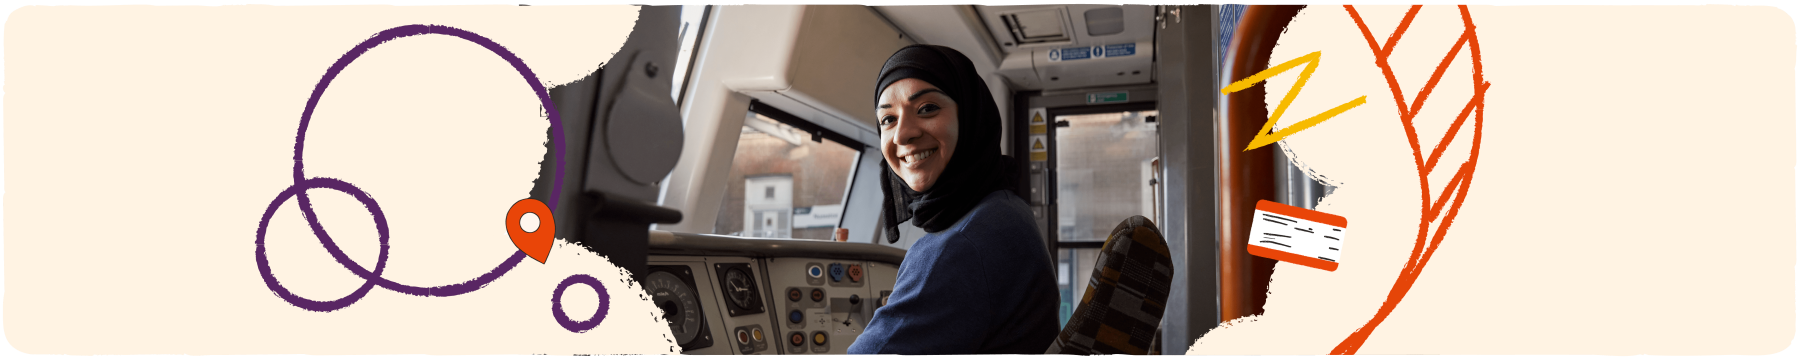 Asian woman driving a train